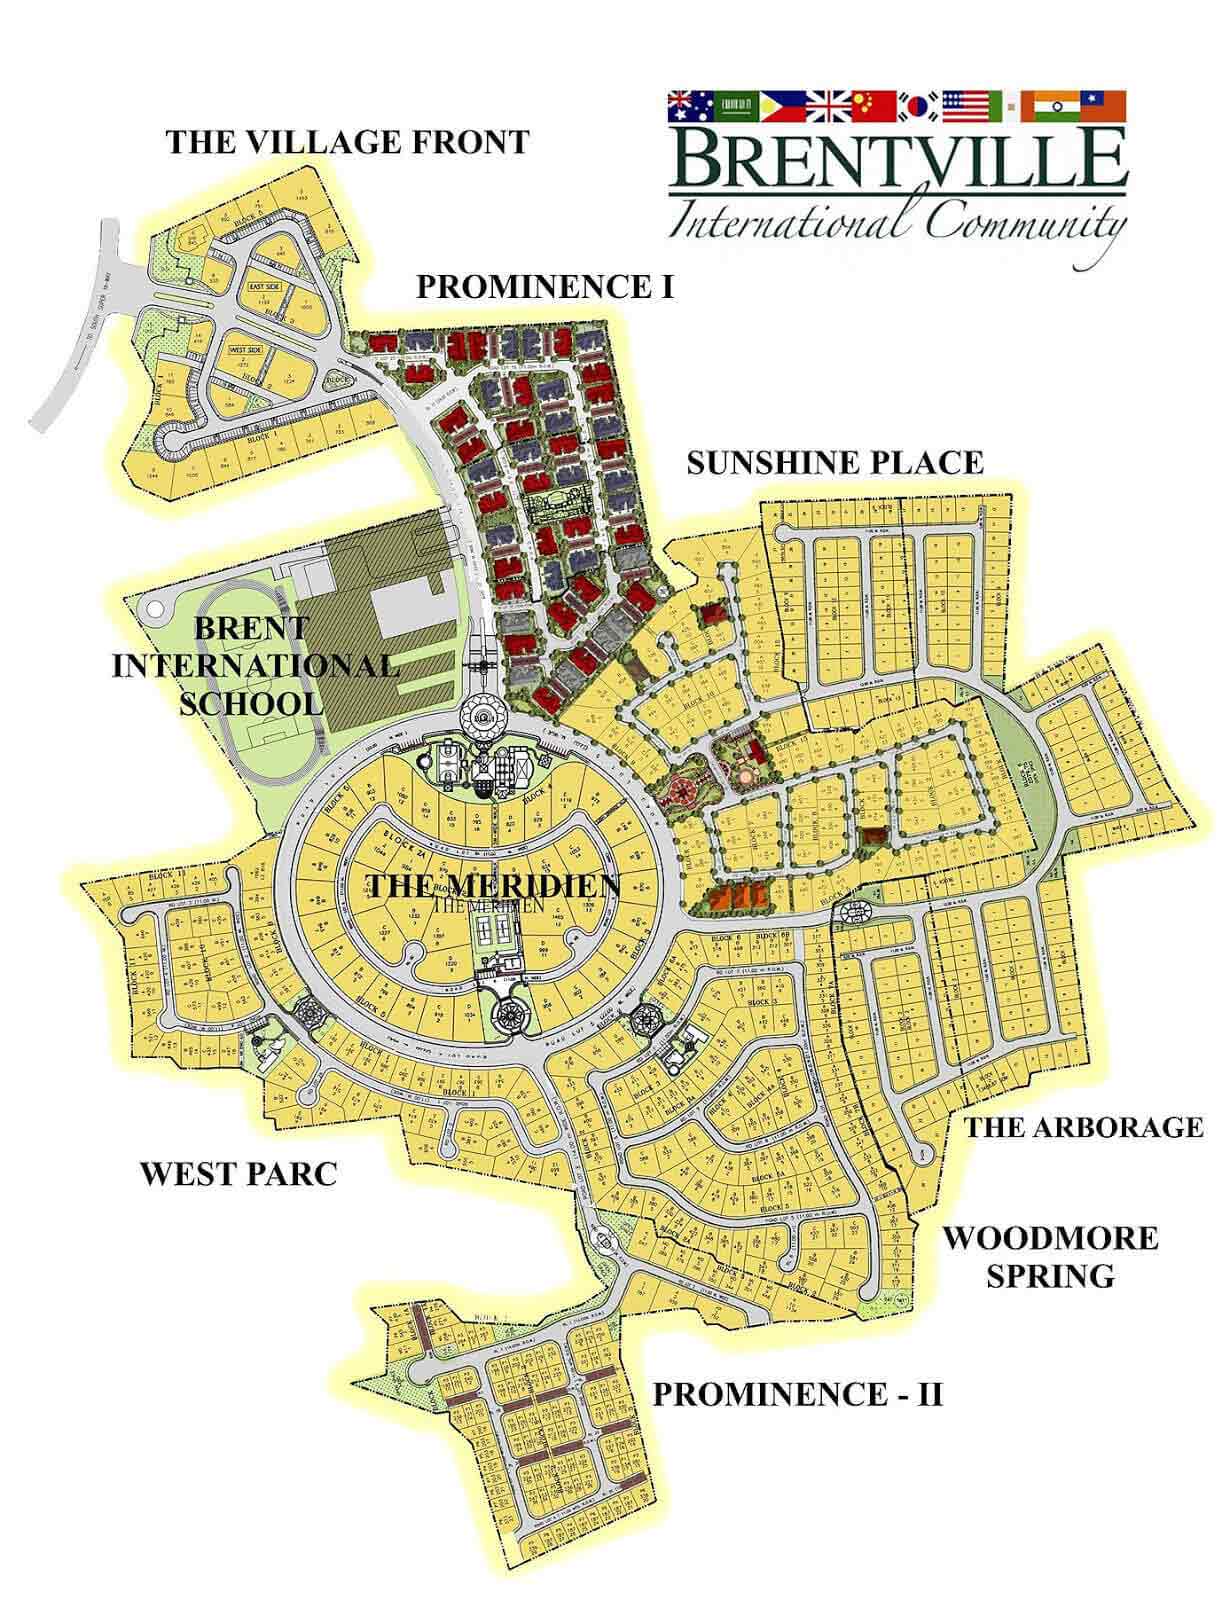 Brentville Filinvest - Site Develomment Plan